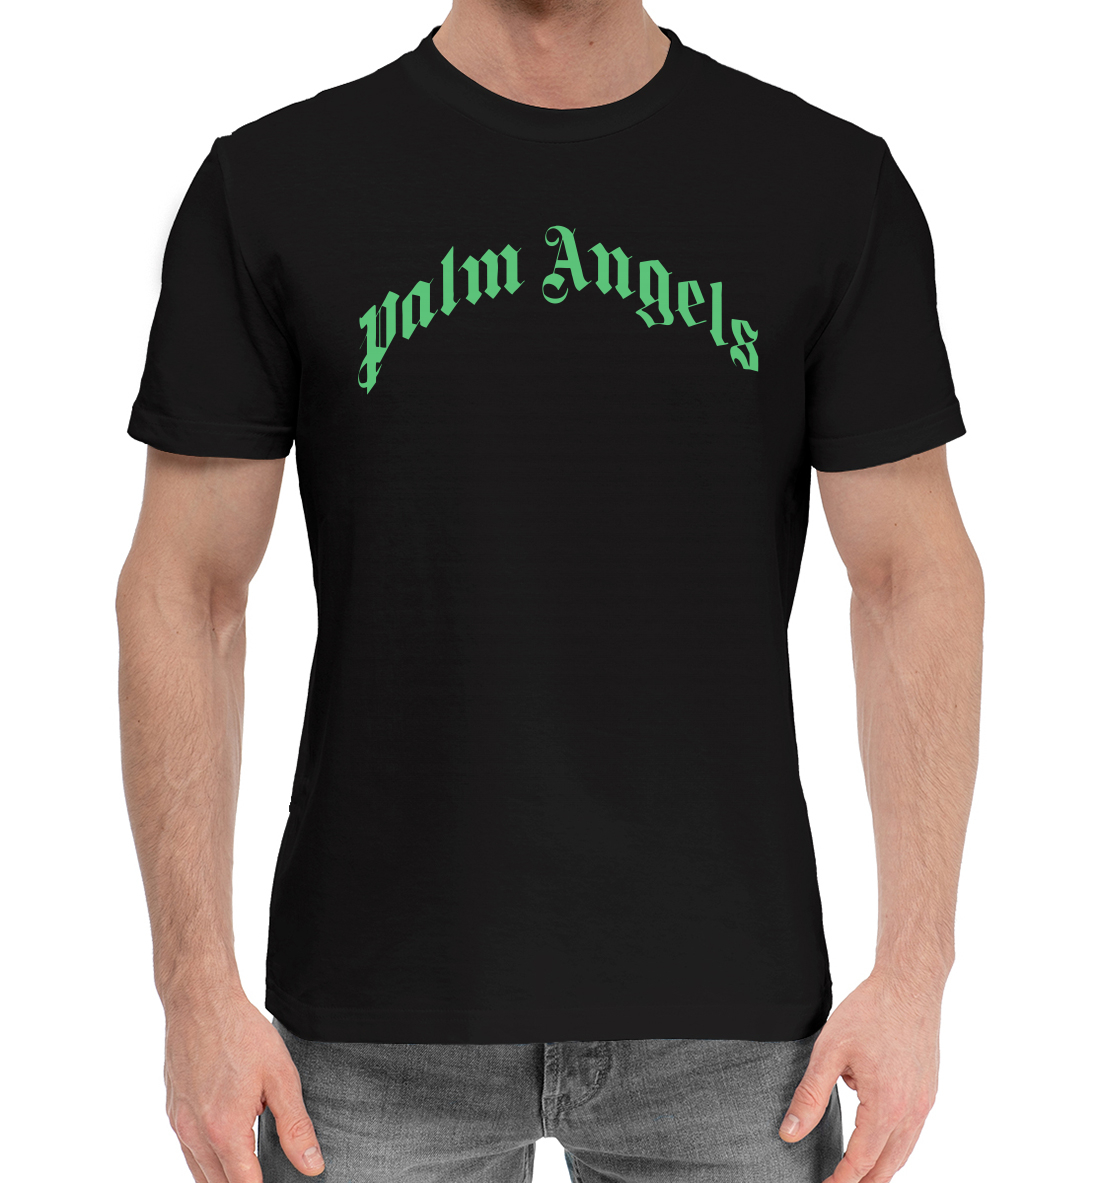 Мужская Хлопковая футболка с принтом Palm Angels, артикул PAG-484255-hfu-2mp